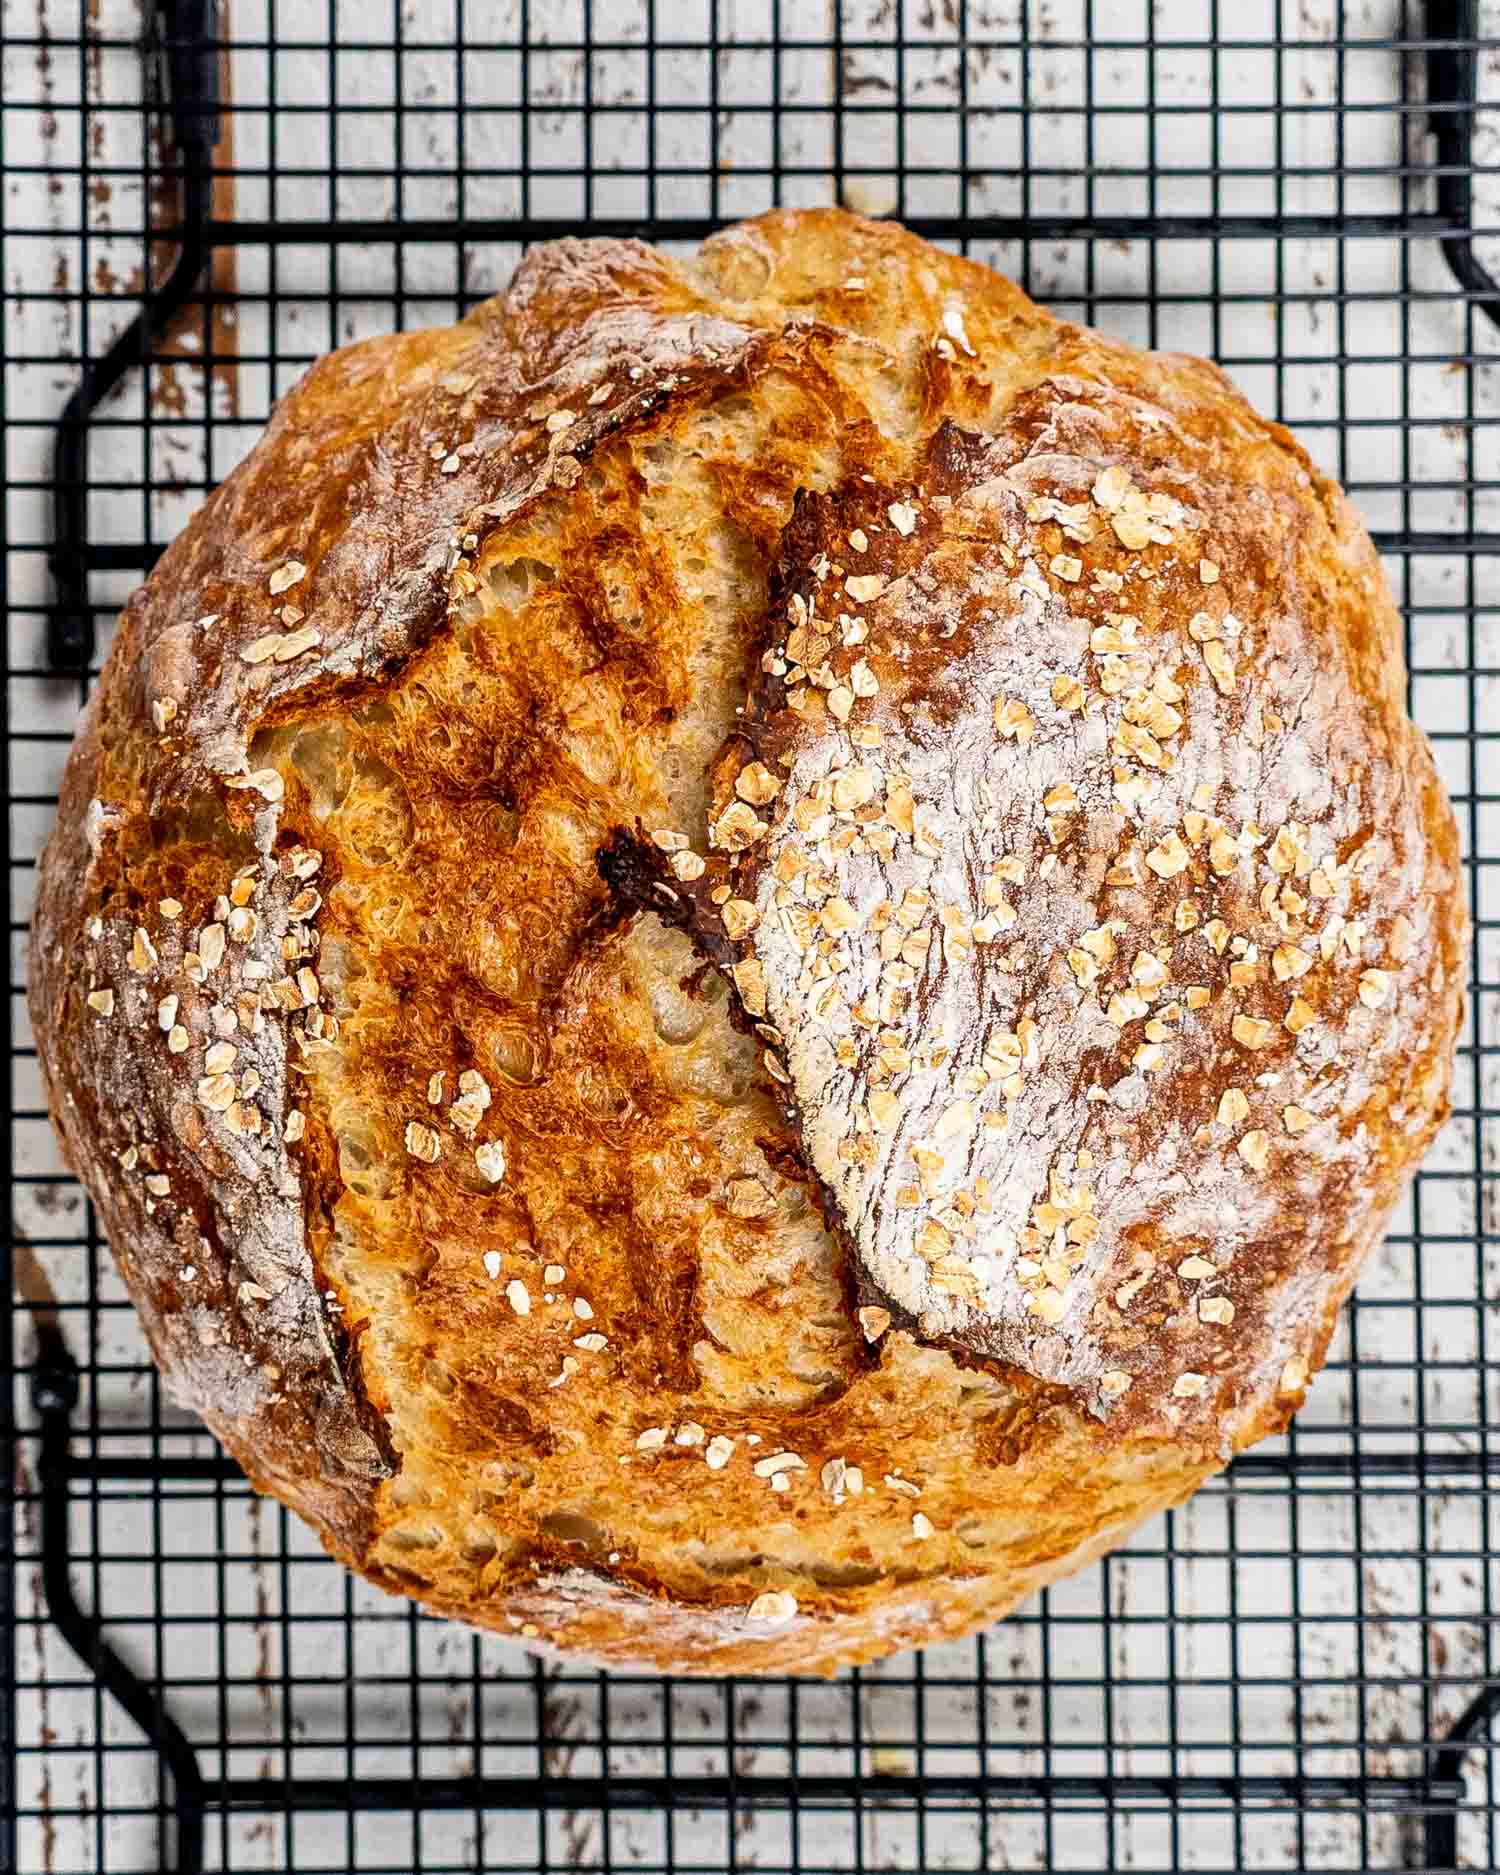 No Knead Artisan Bread (Honey Oat Recipe) - The Busy Baker